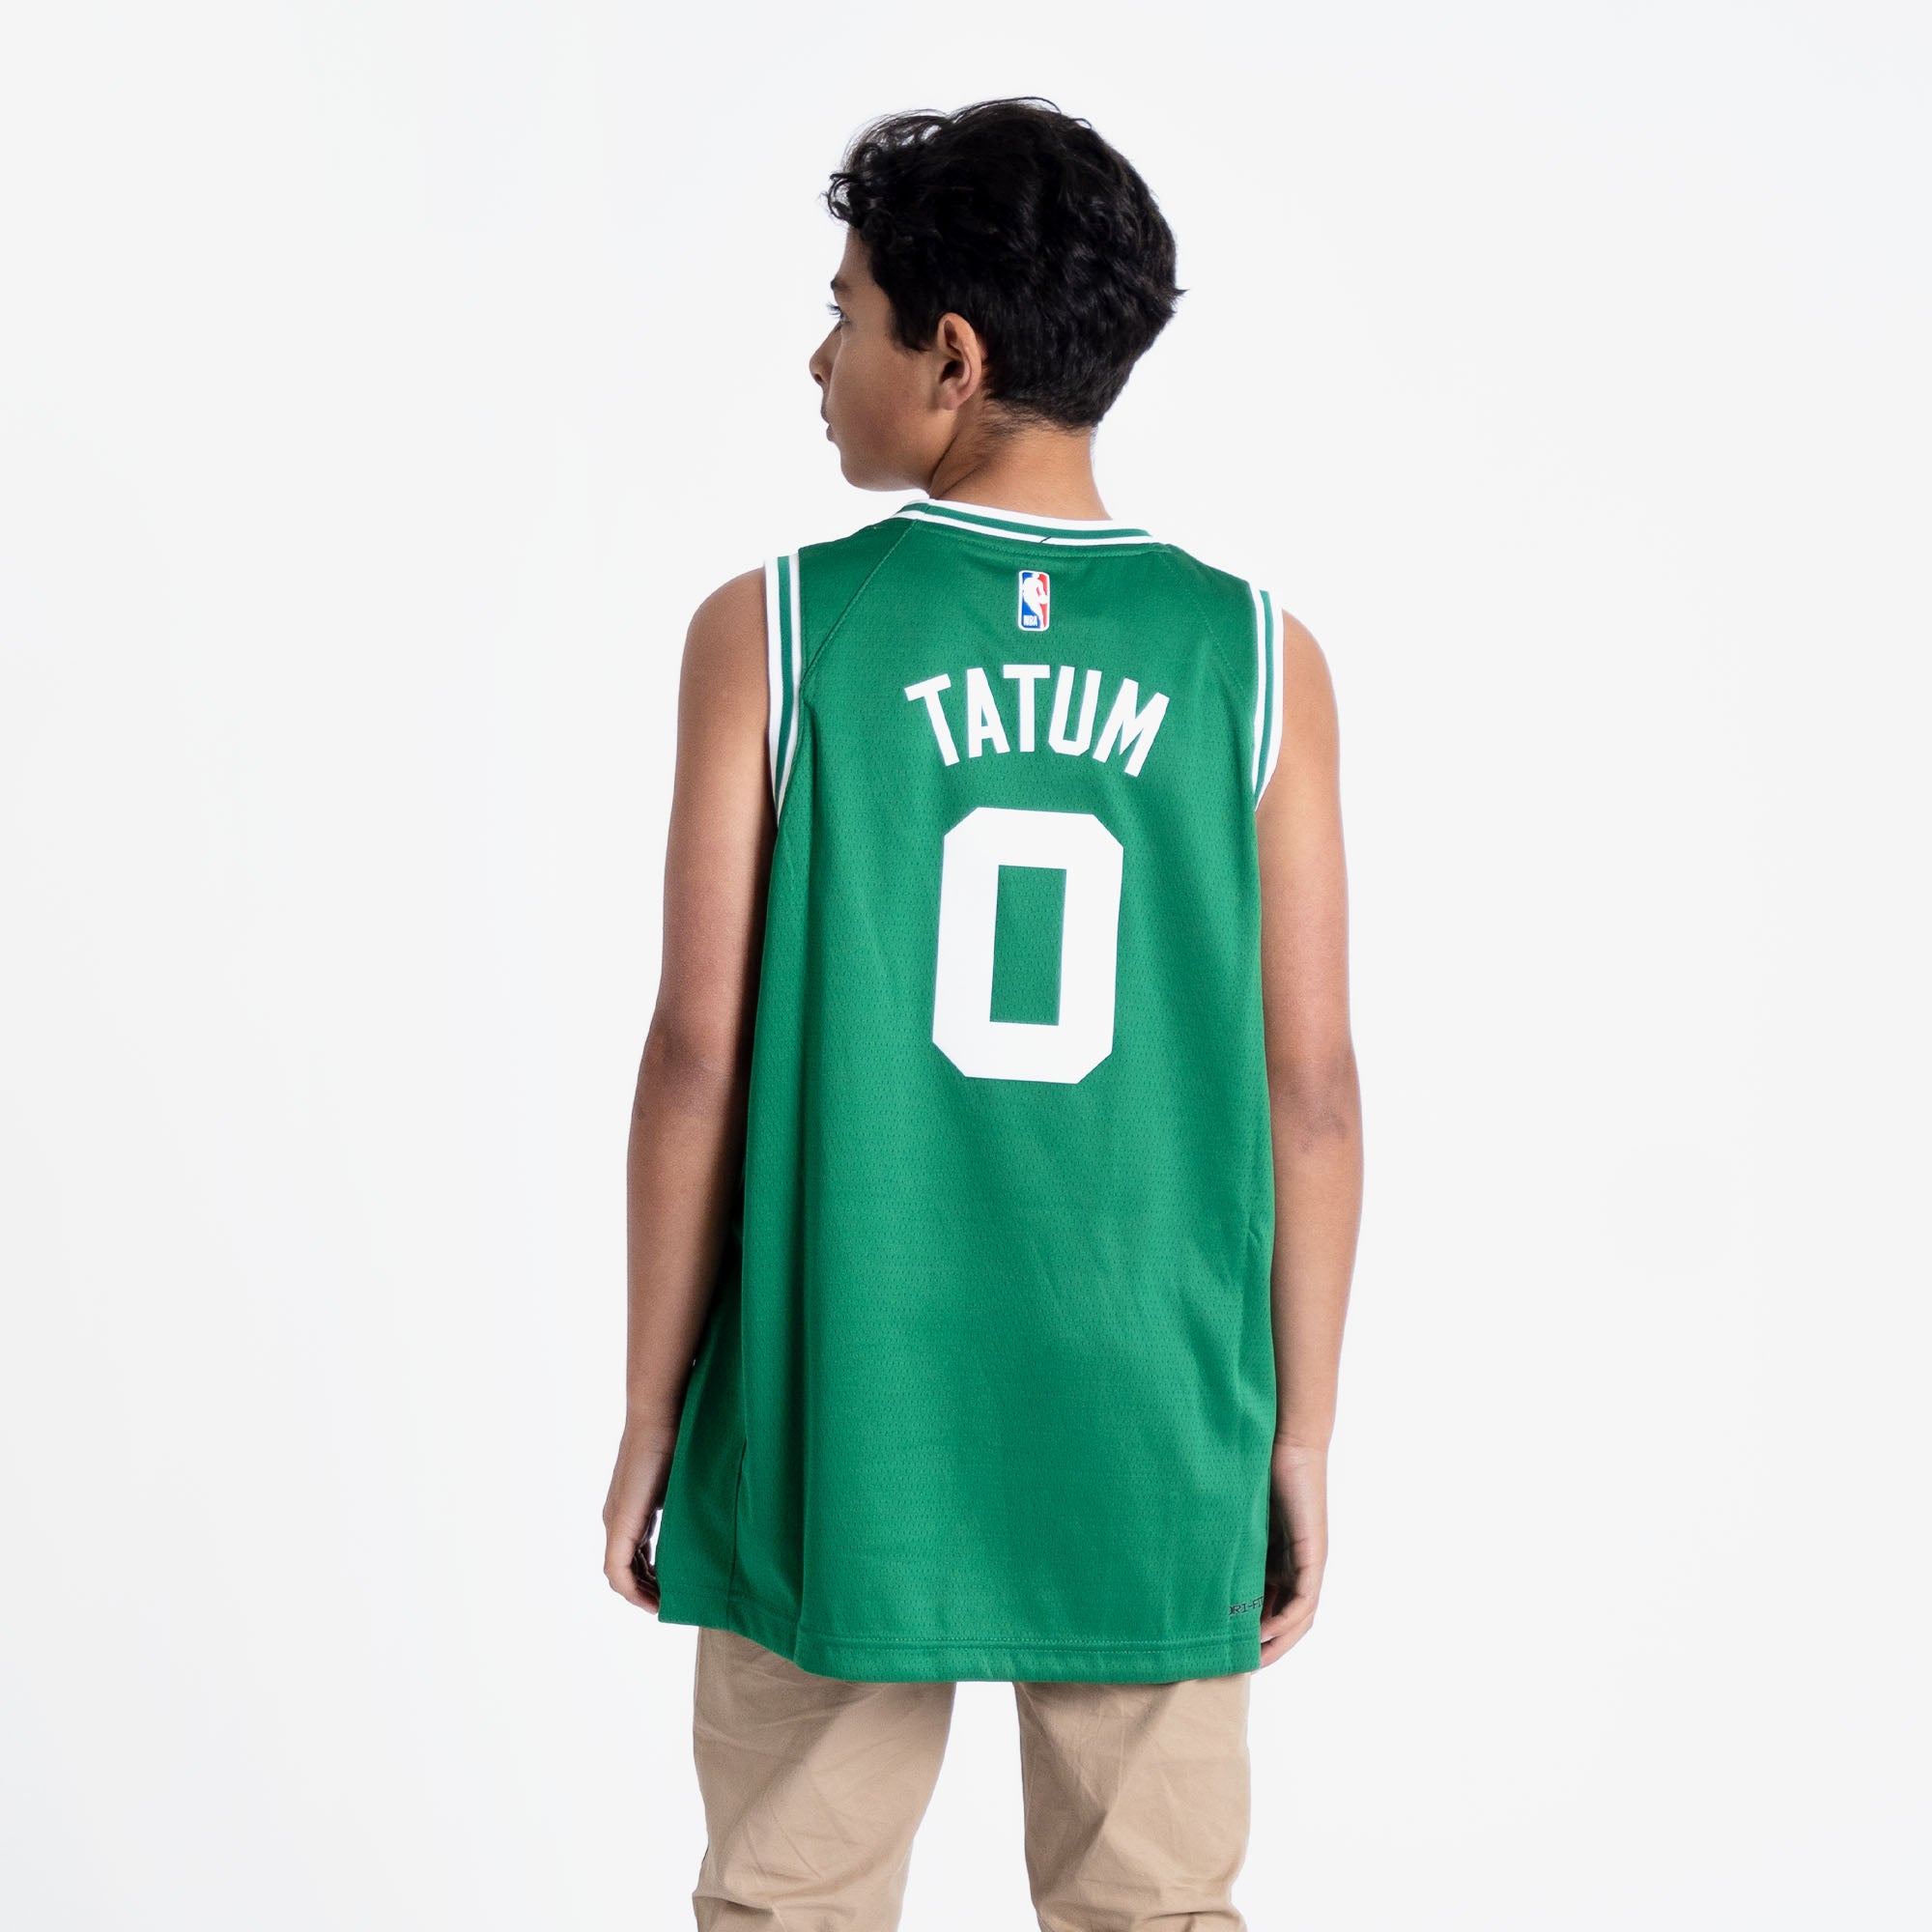 Boston Celtics Jayson Tatum Basketball Player Playoffs 2023 Trending T-Shirt  - Binteez